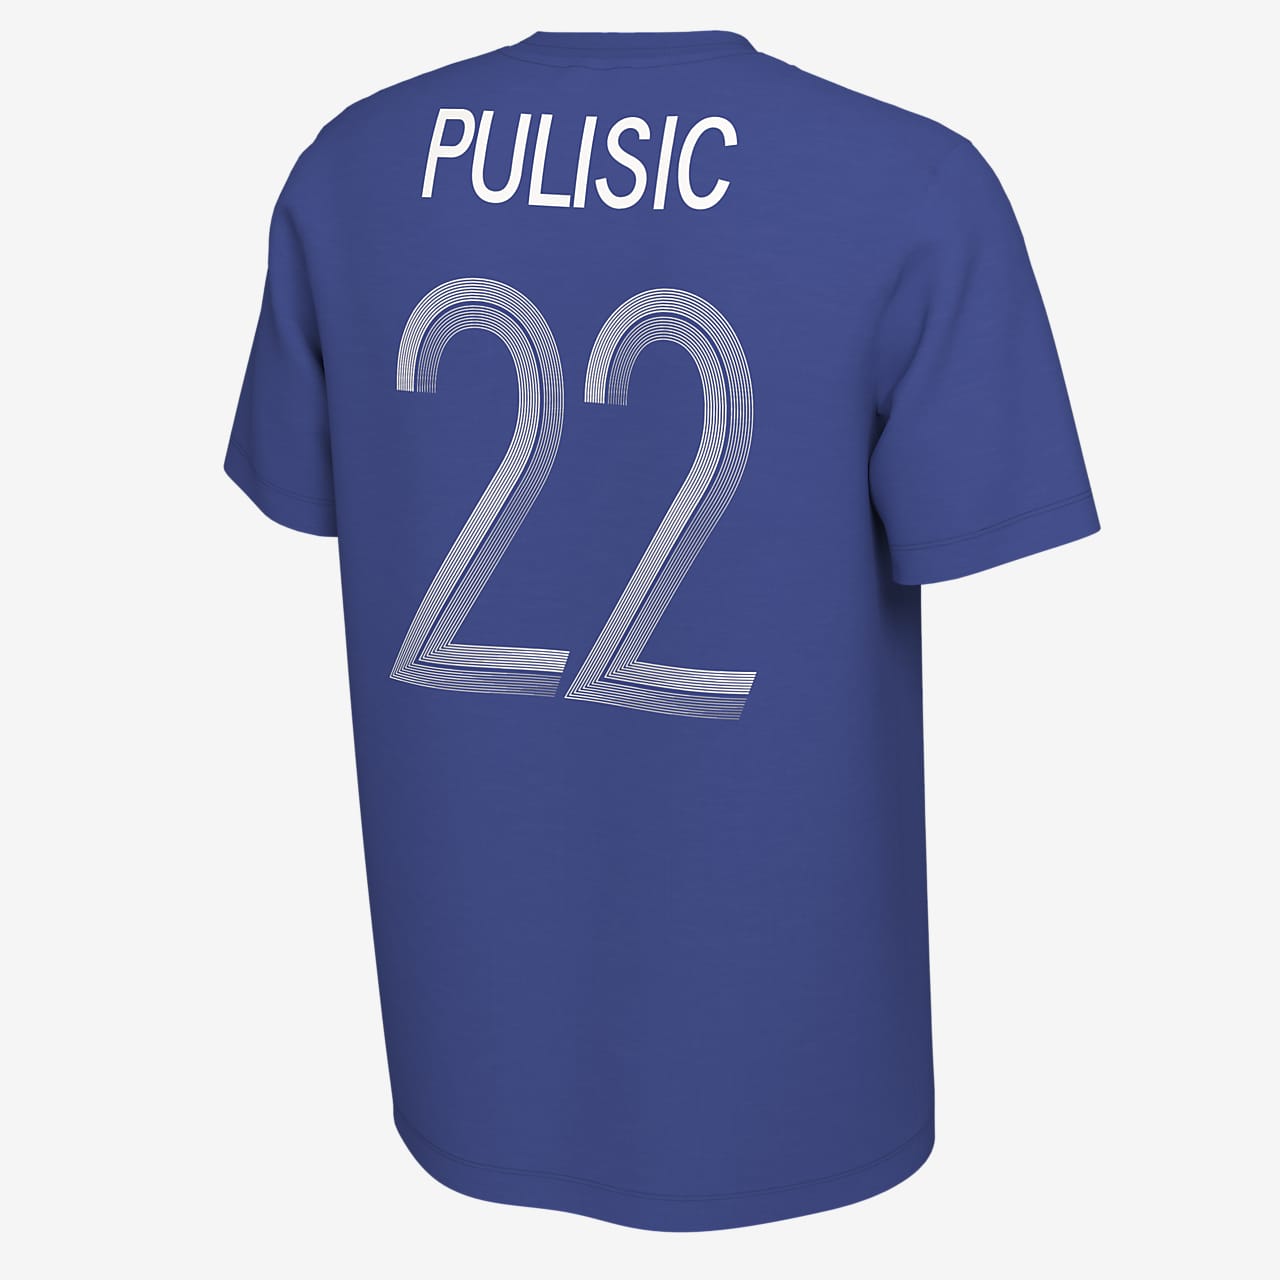 Chelsea FC (Pulisic) Men's Soccer T-Shirt. Nike.com